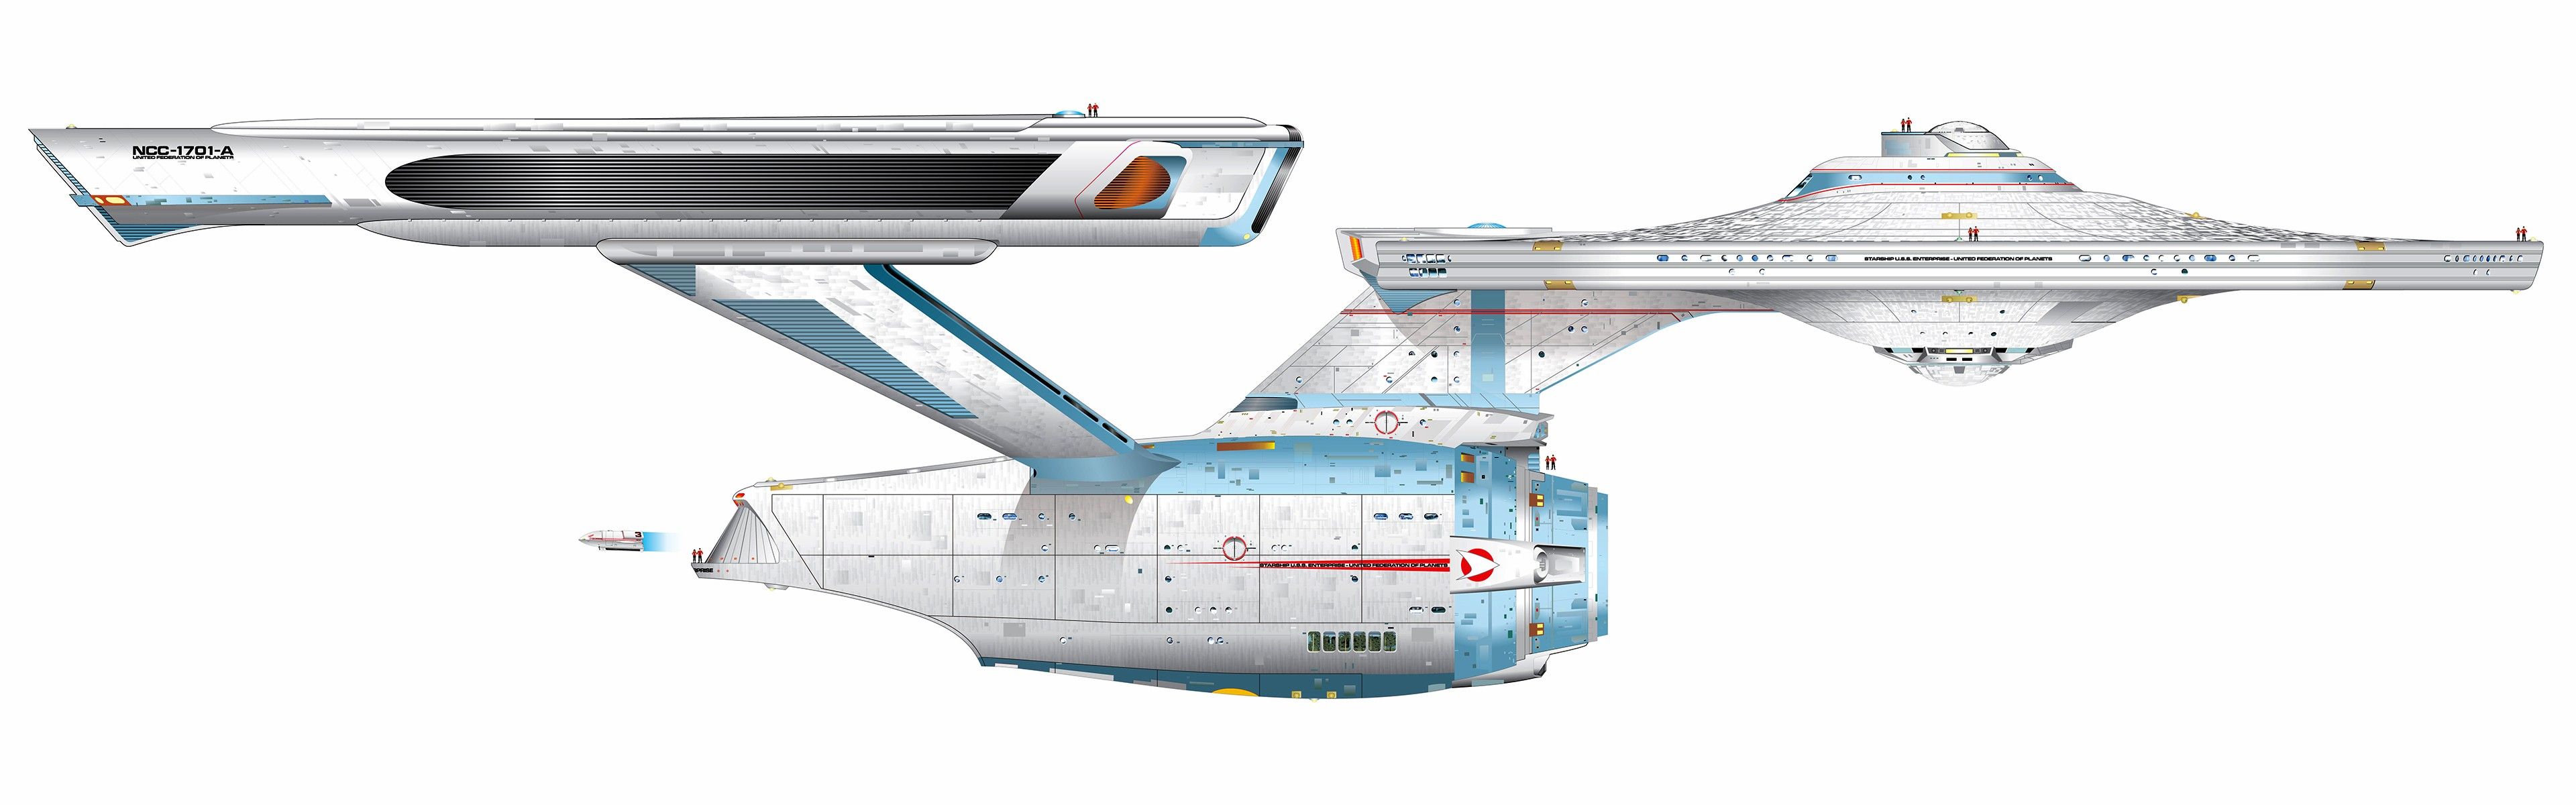 3840x1200 Star Trek USS Enterprise Spaceship Multiple Display Simple Background Dual Monitors Wallpaper Resolution: ID:82379